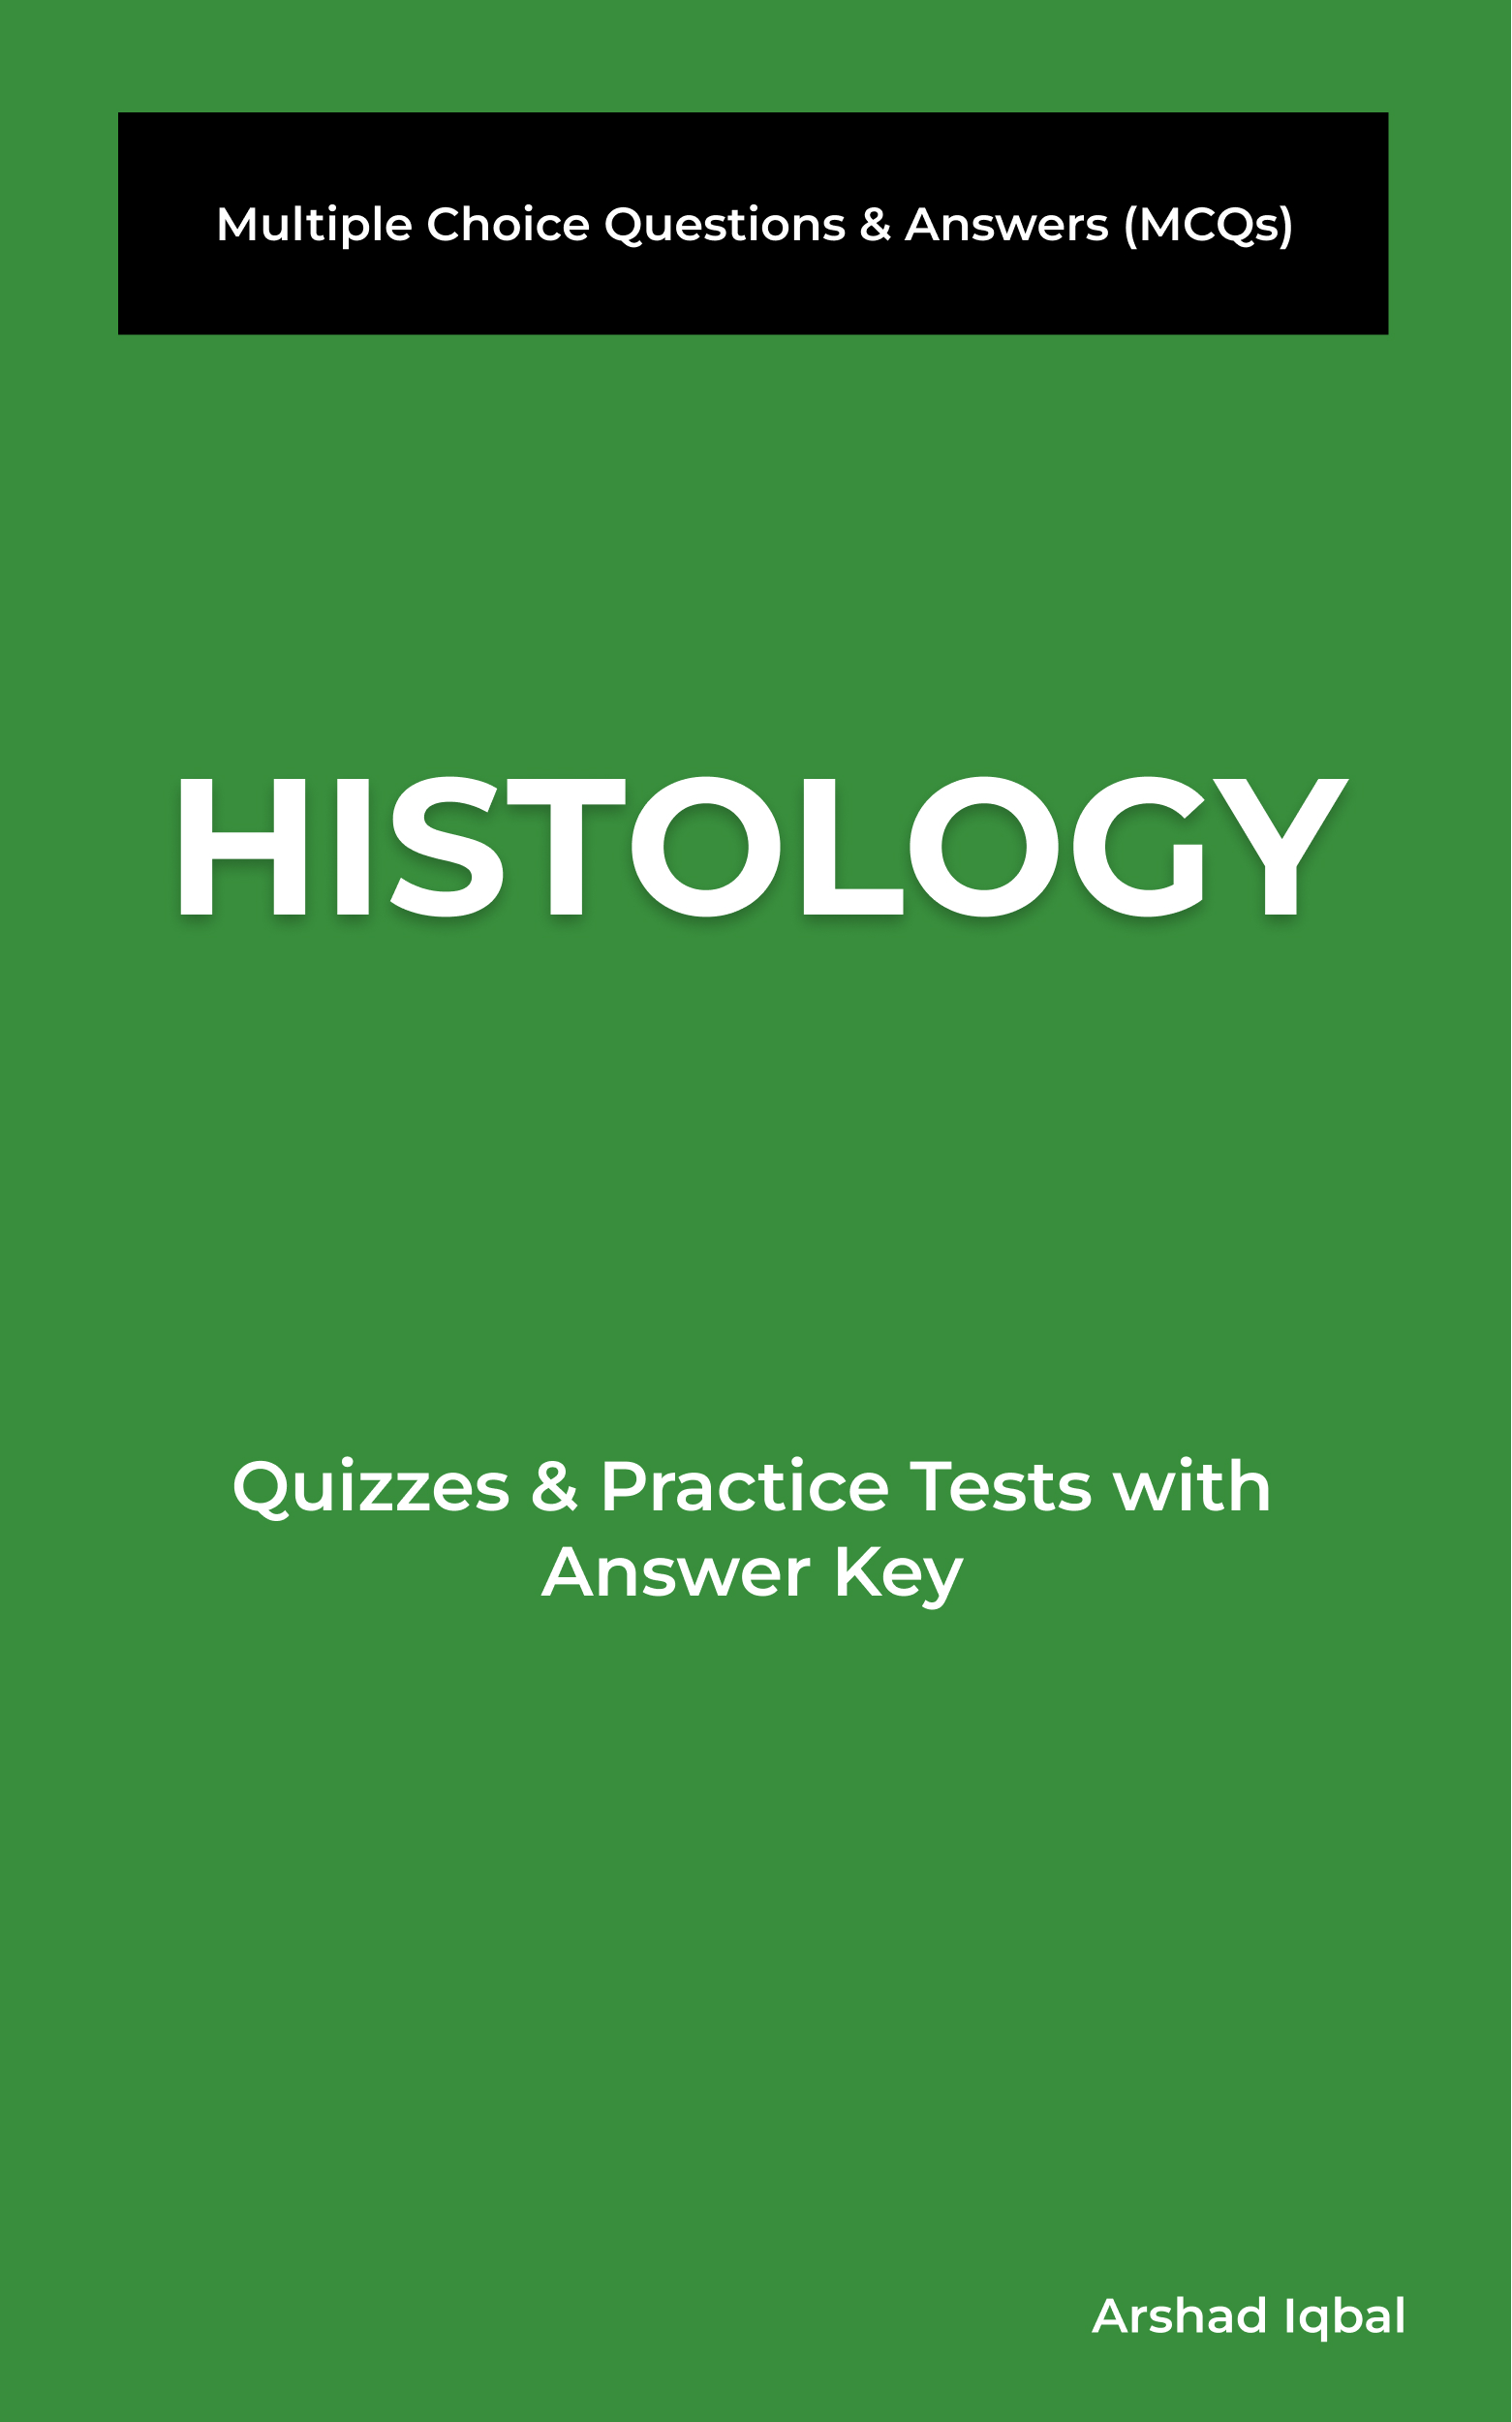 Histology MCQ Book PDF